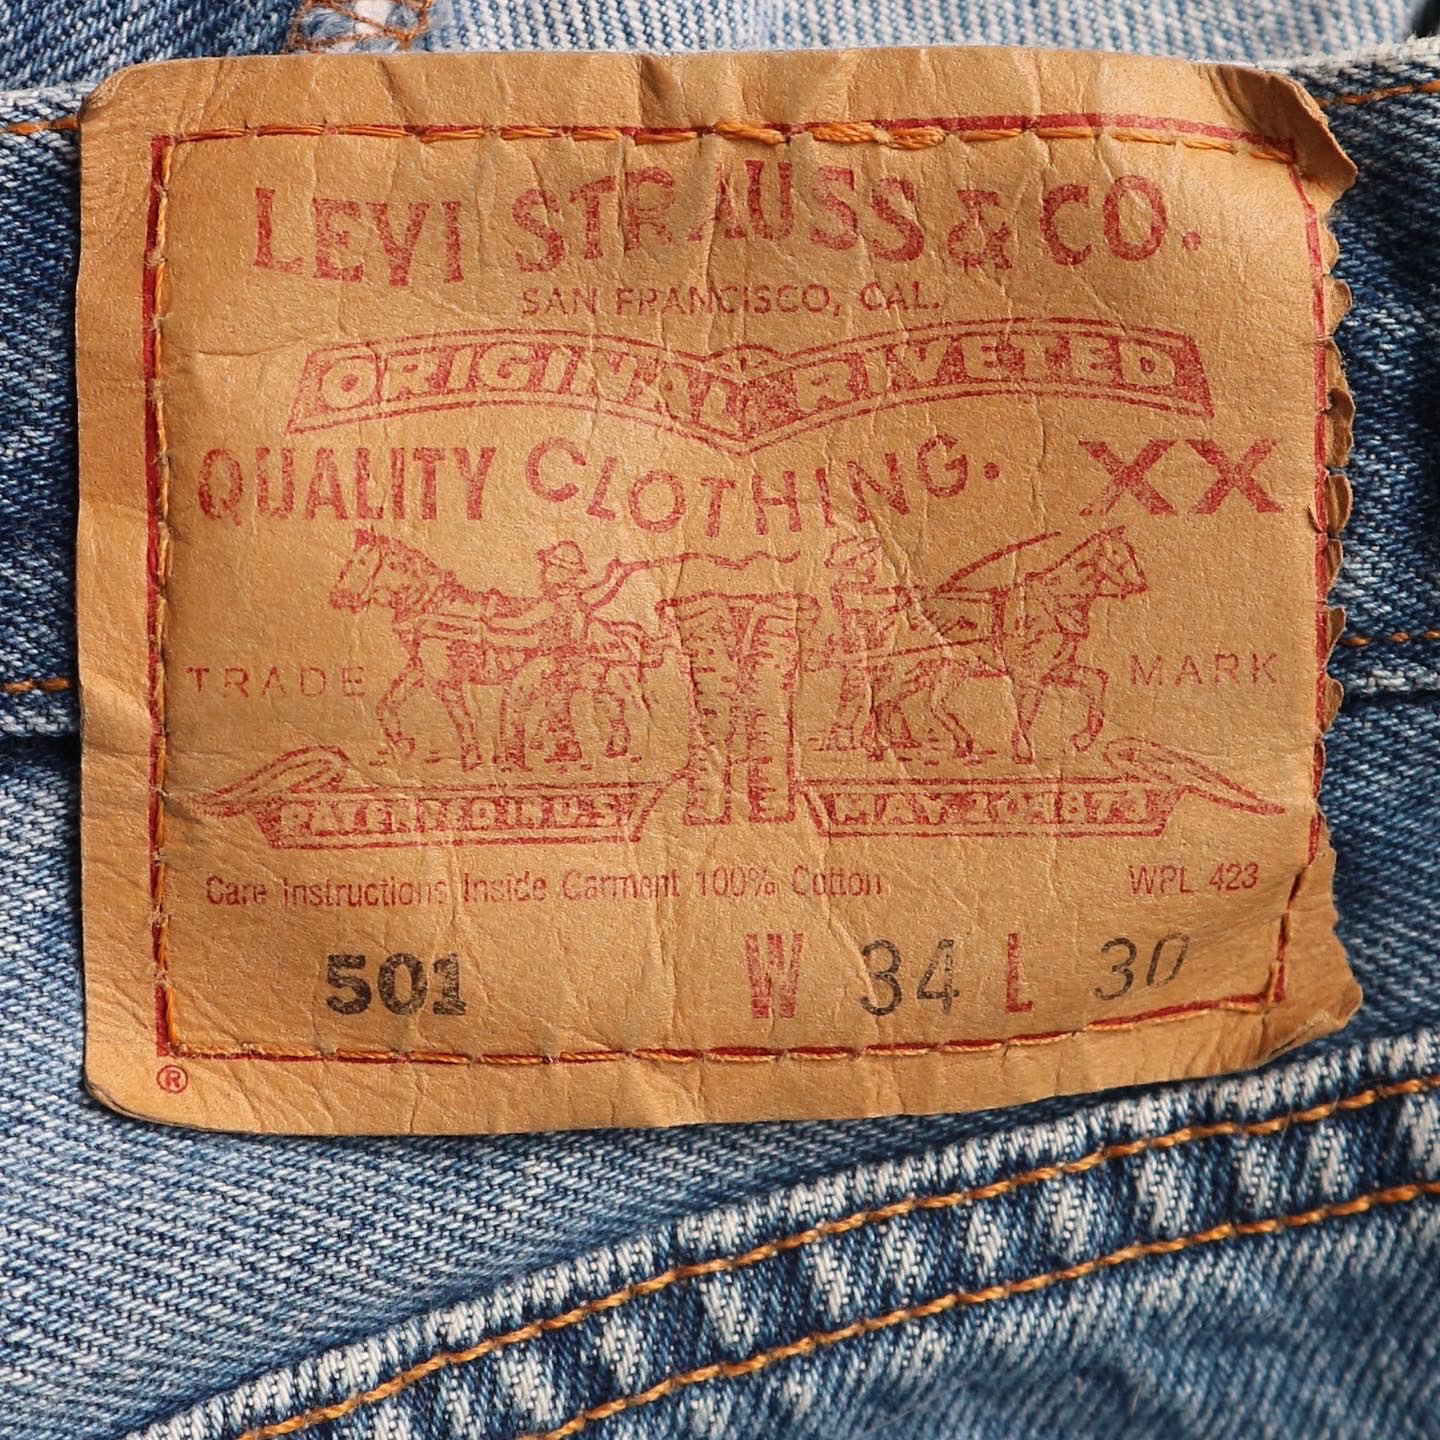 2000s Levi's 501 Denim Jeans Size 33 denimister